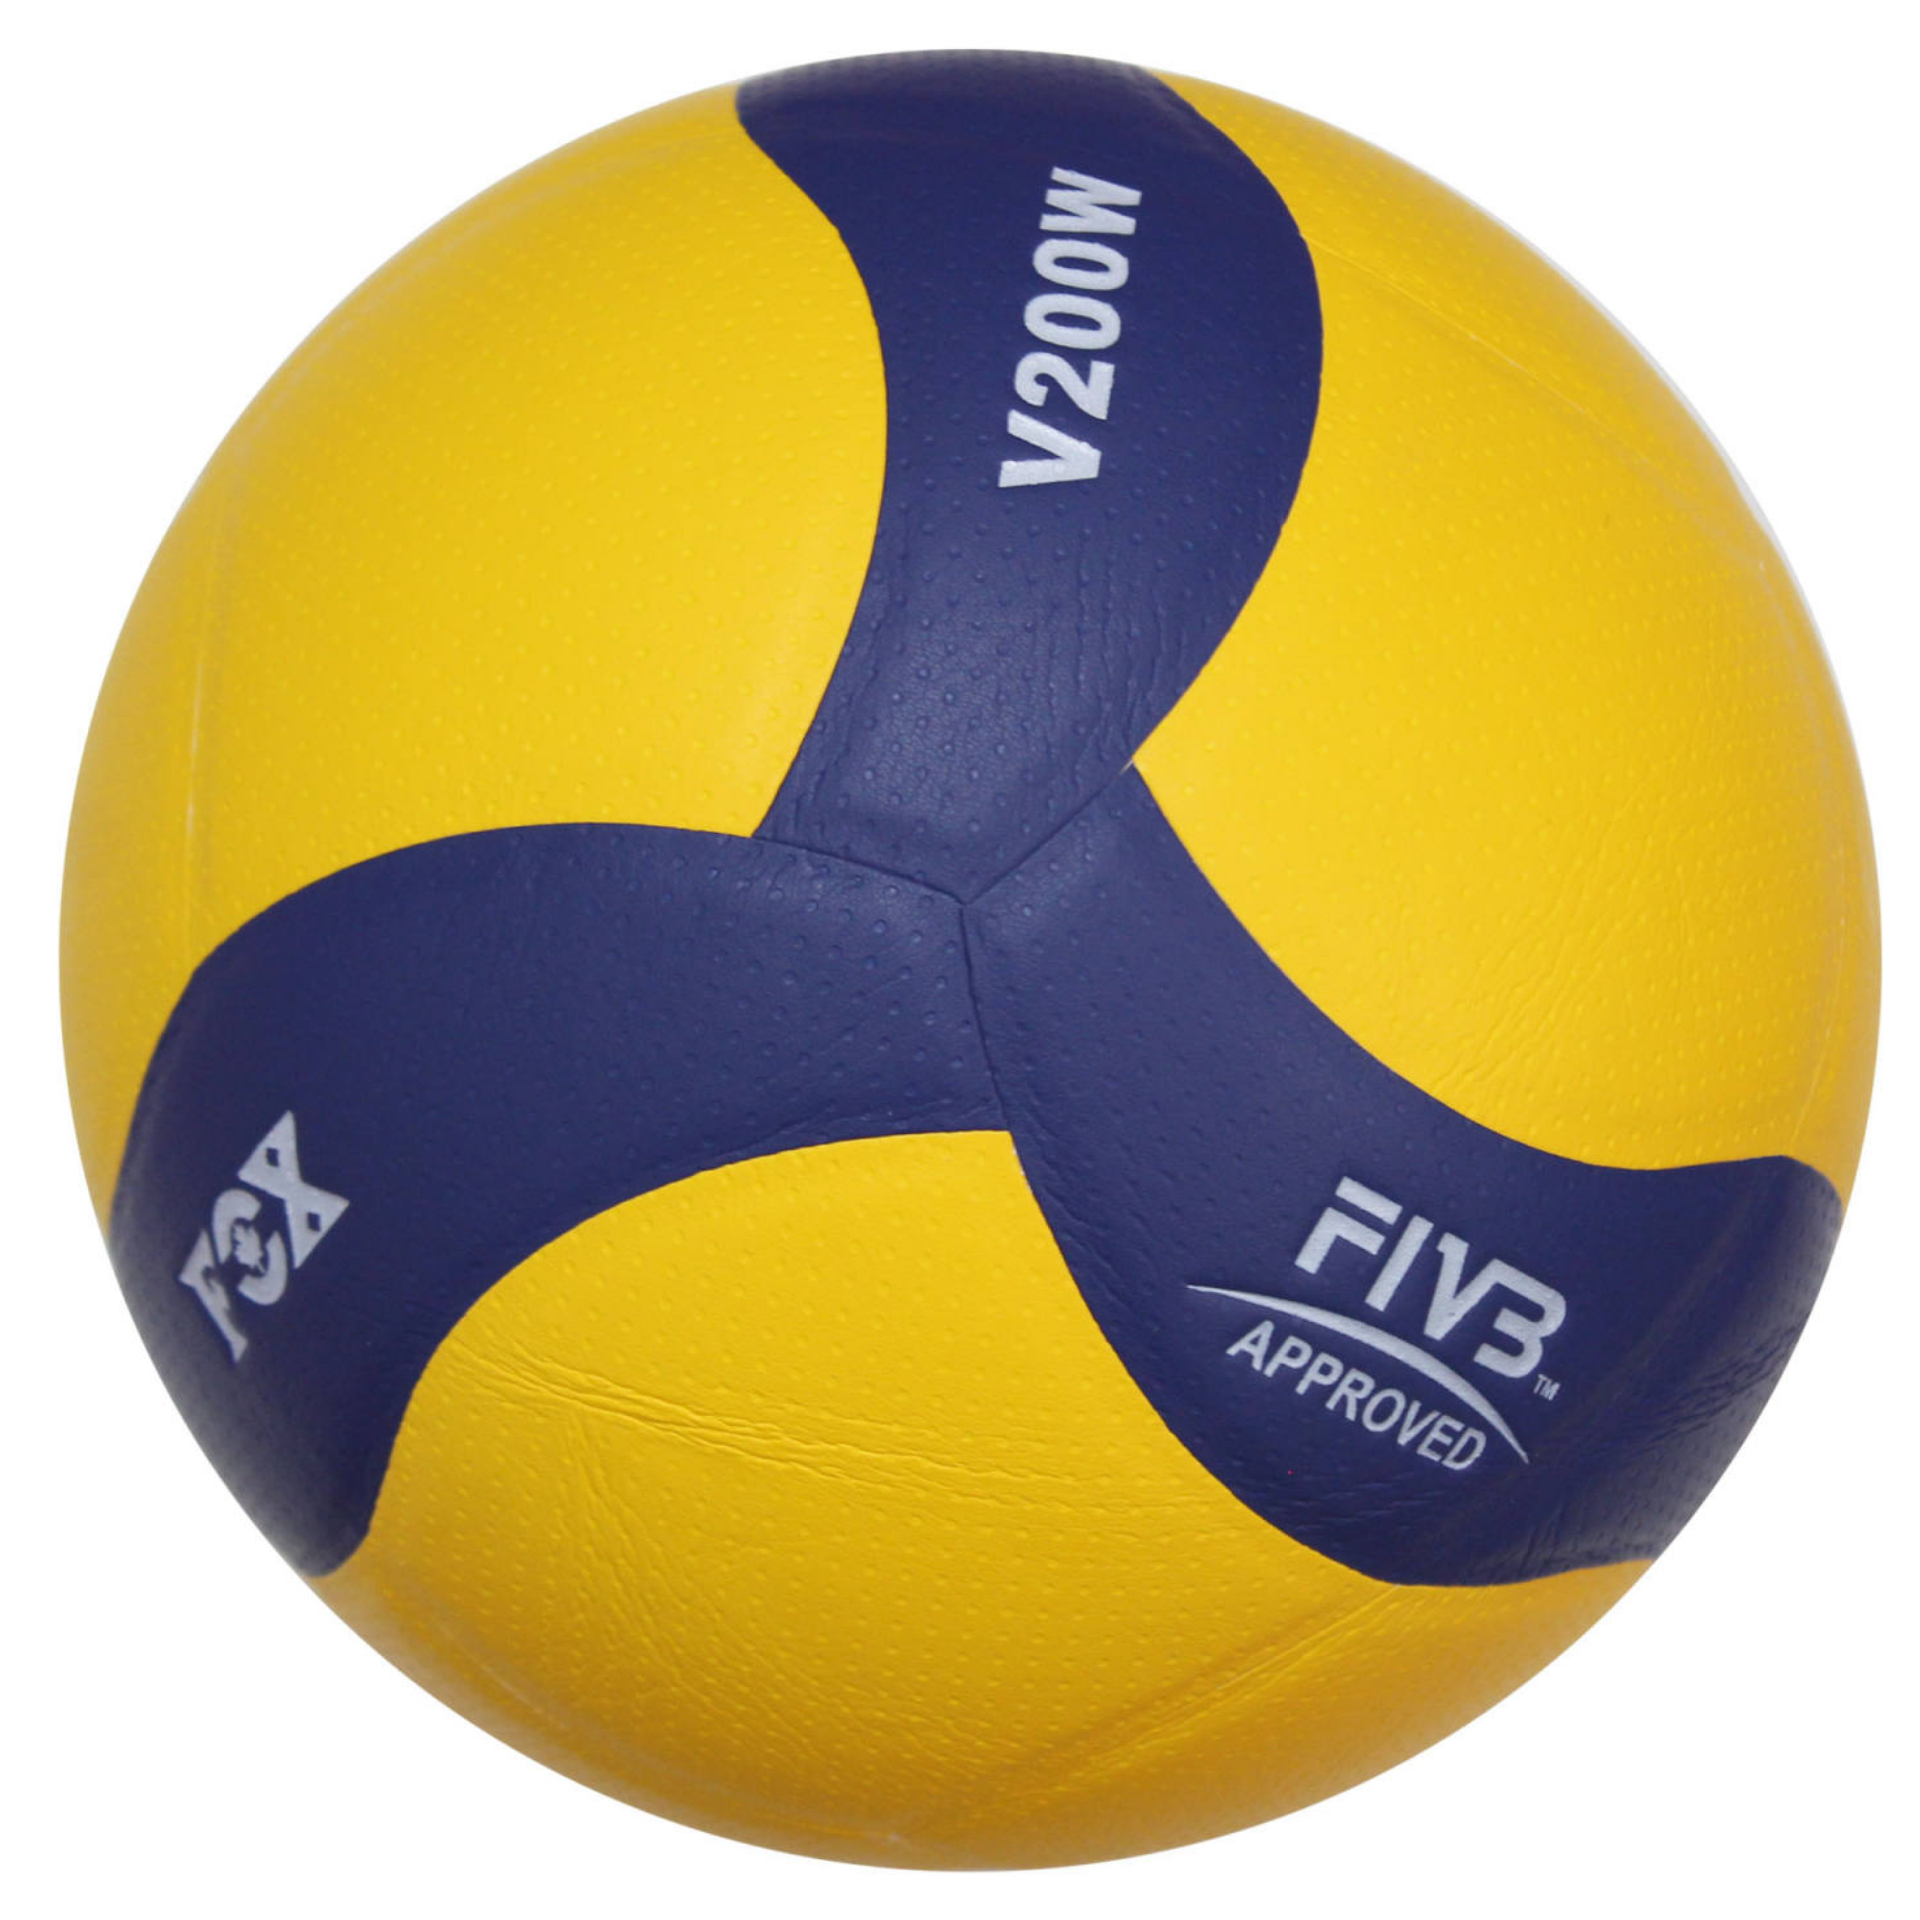 توپ والیبال مدل F.x v200w غیر اصل